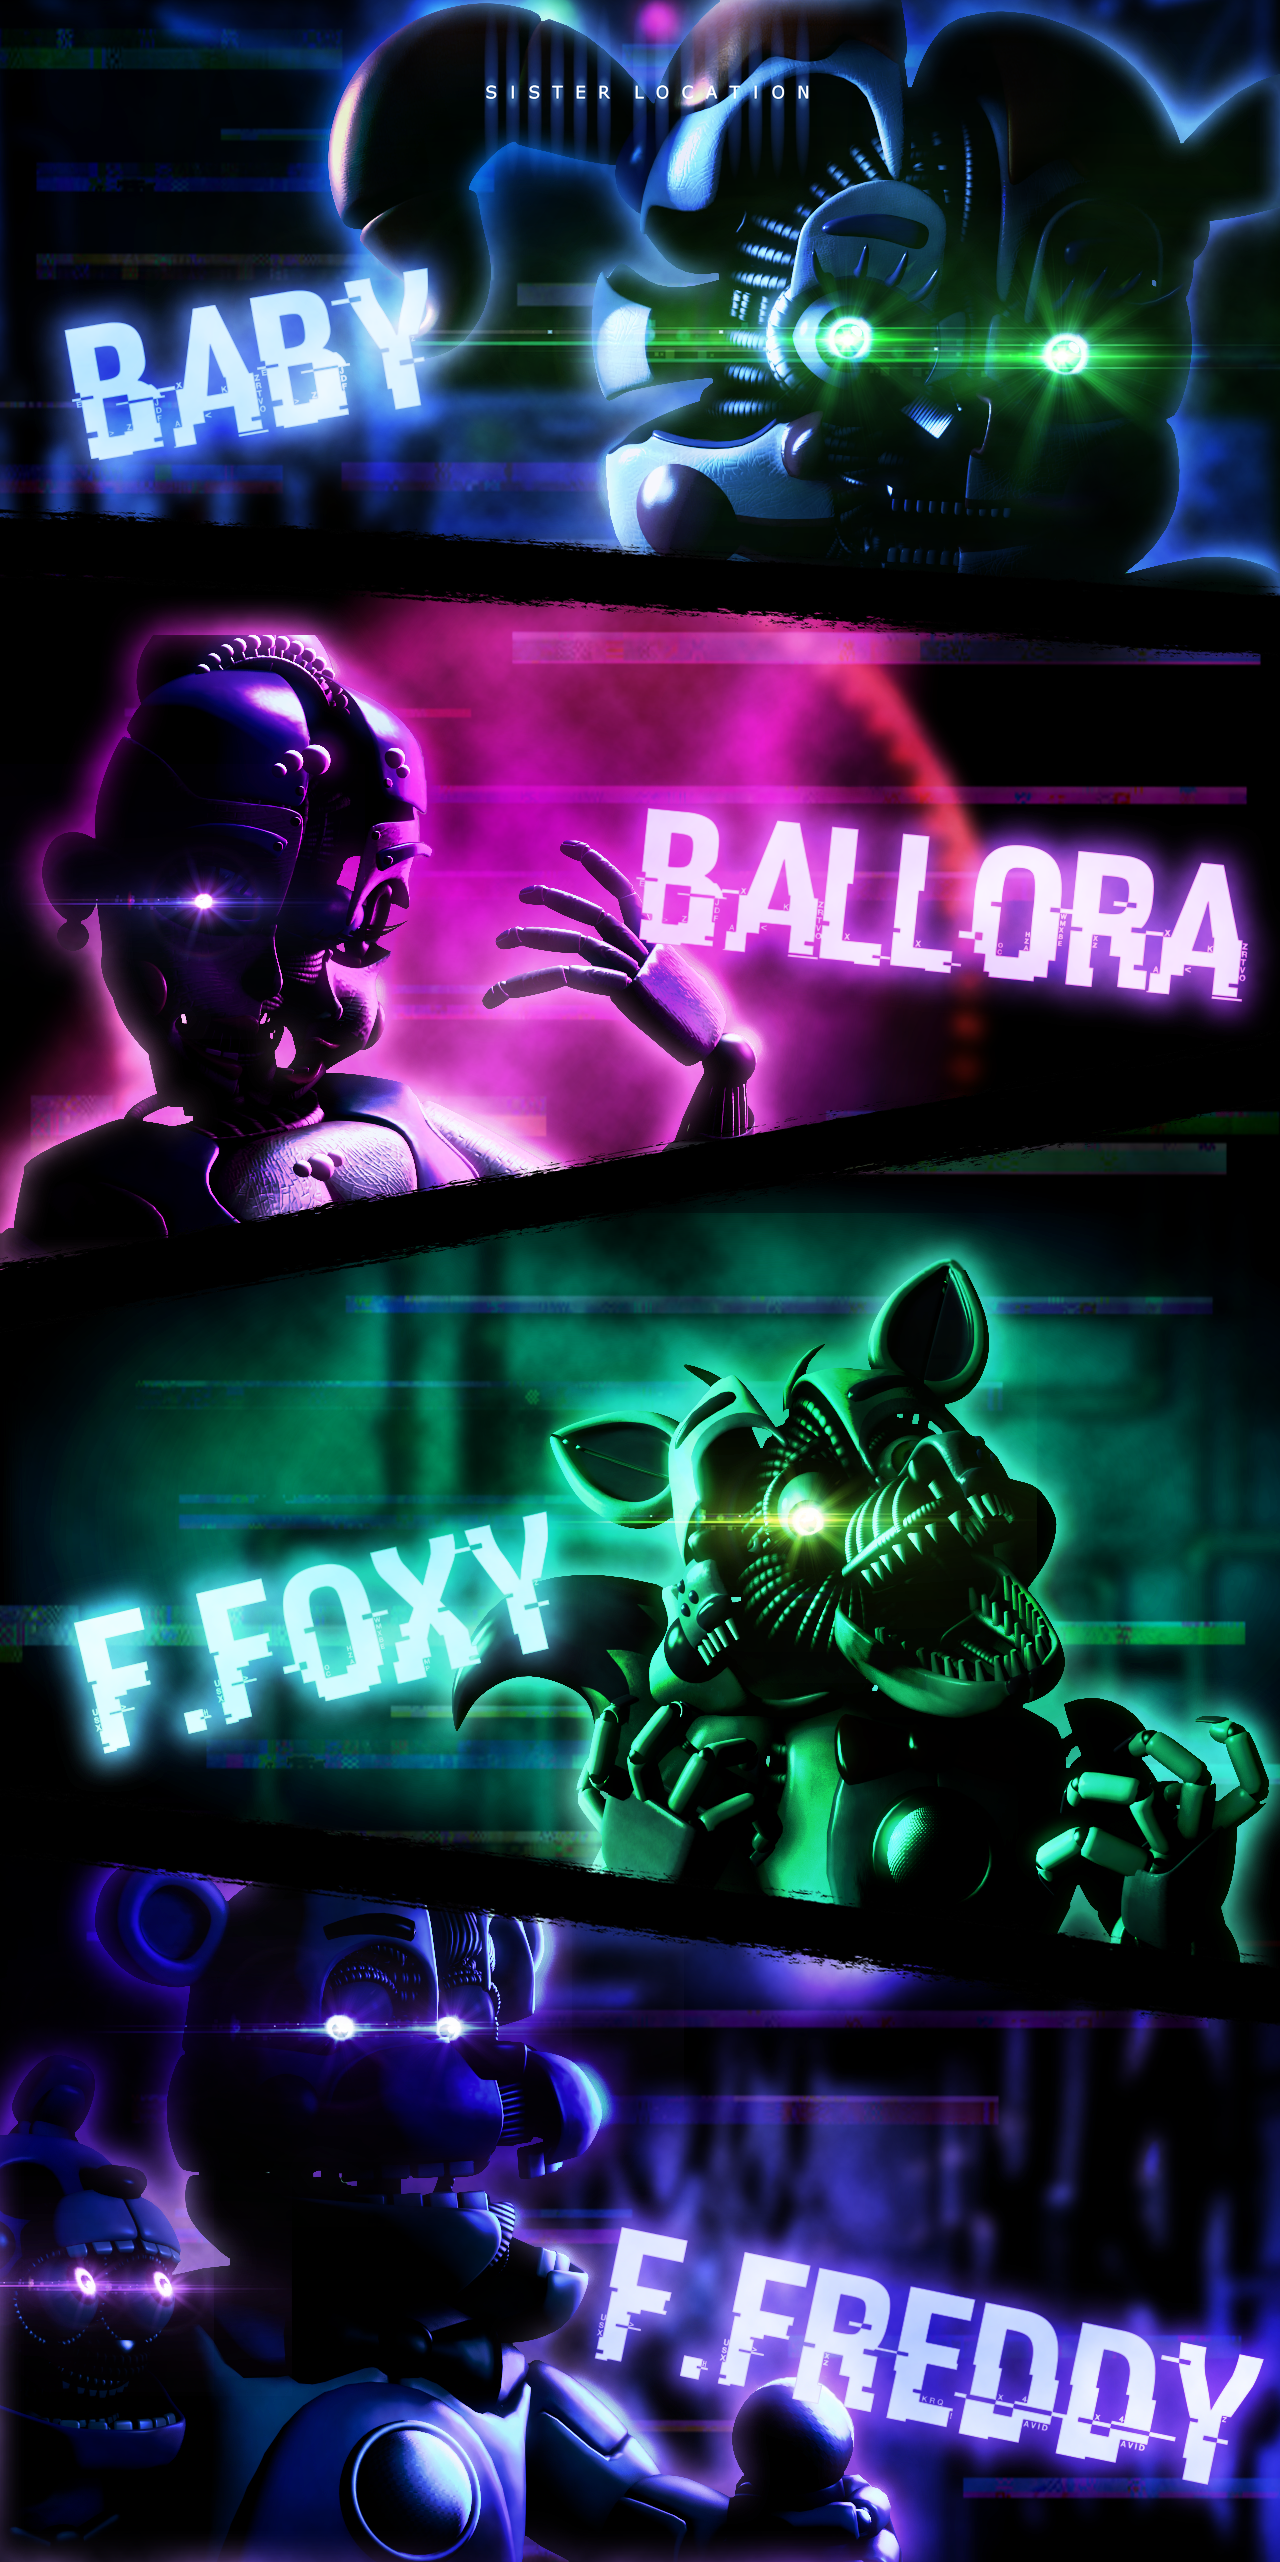 fnaf sister location wallpaper,movie,neon,poster,games,darkness